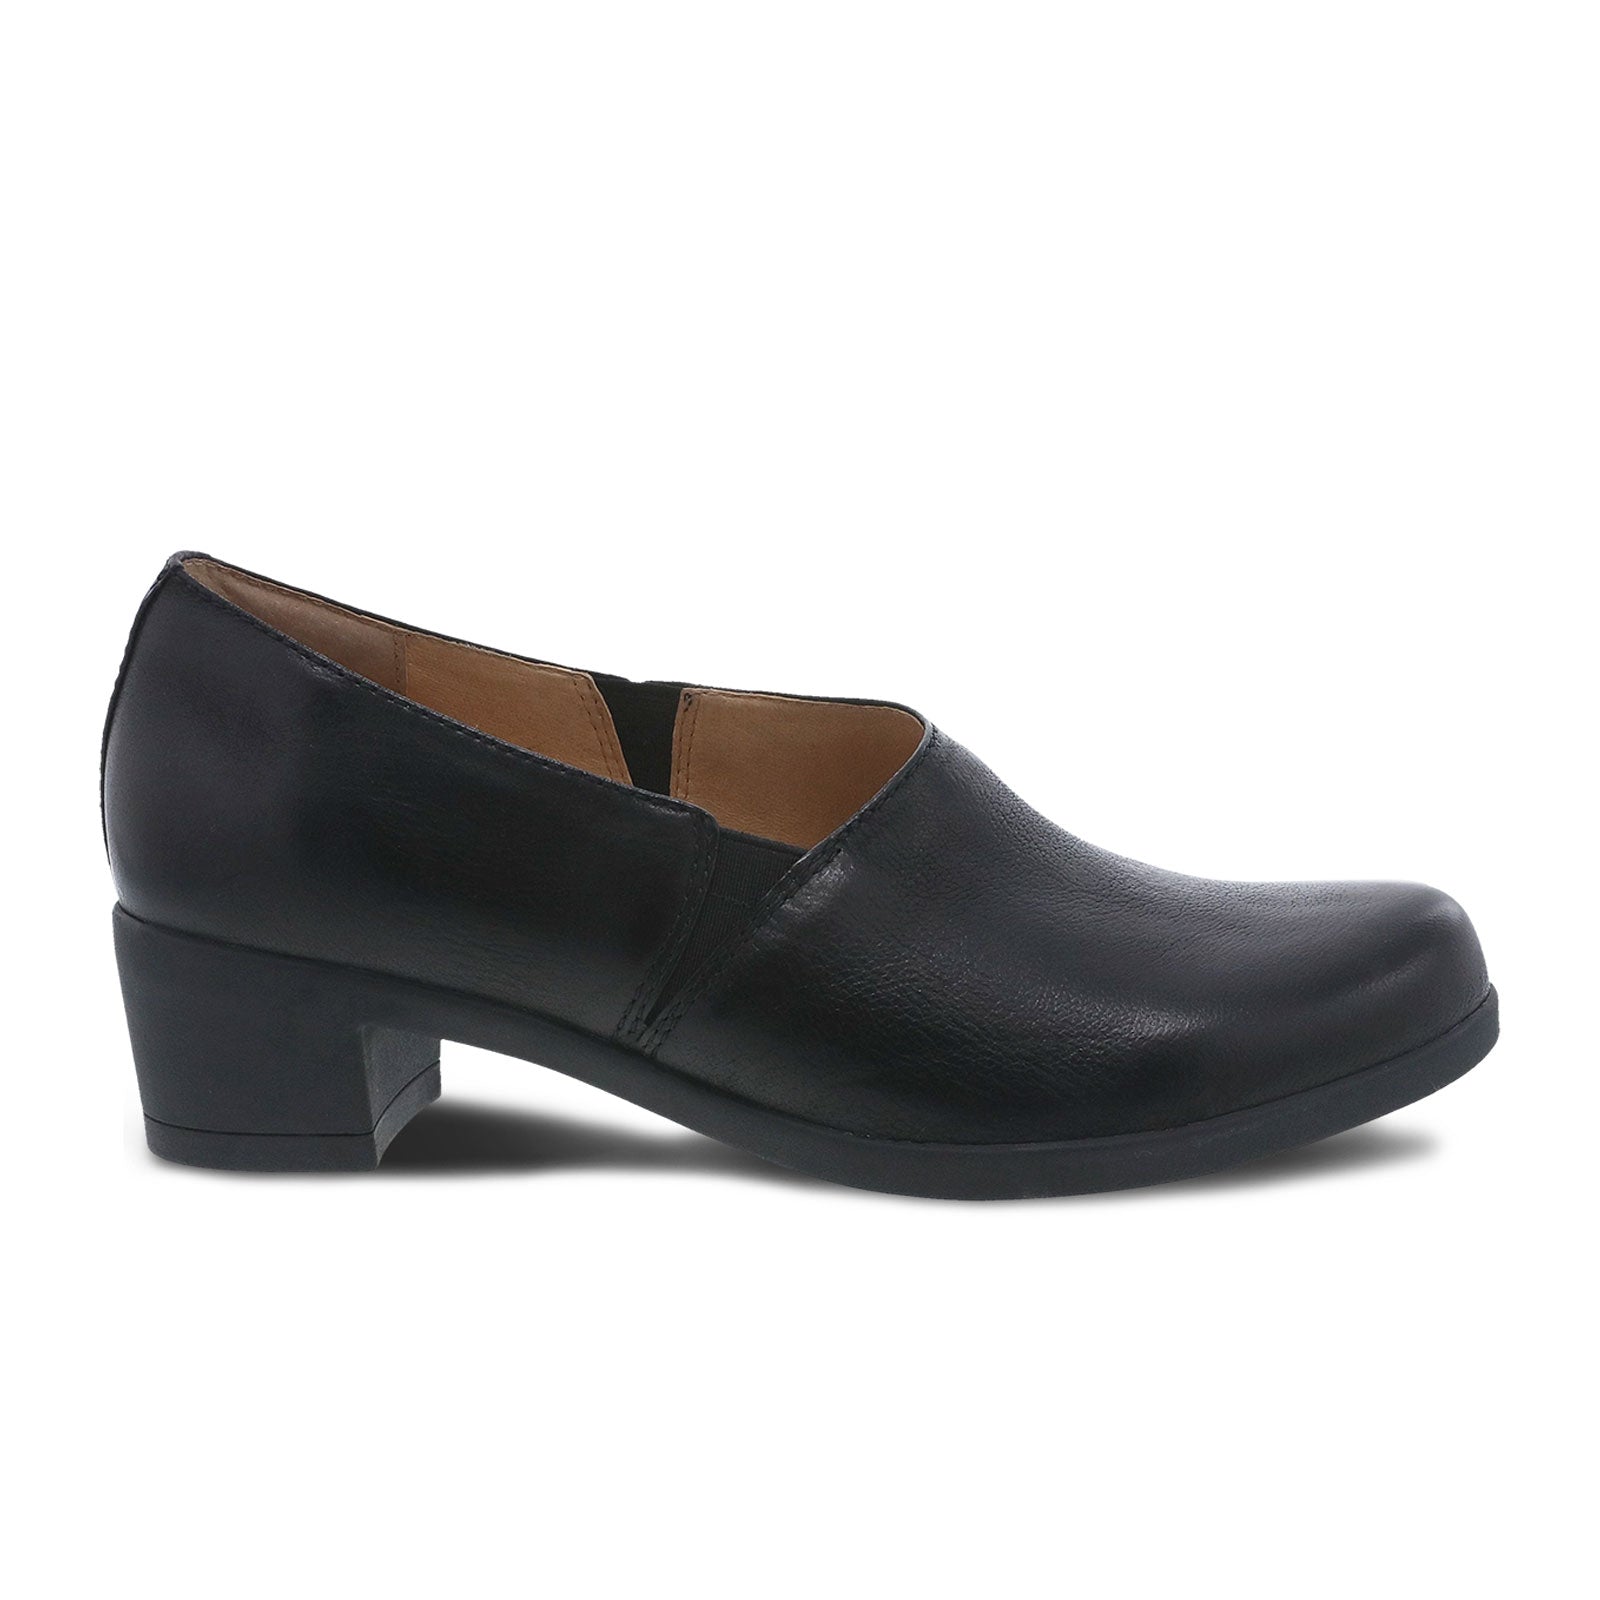 Fashion Women Pointed Toe Flats Low Heels Pumps Slip on Footwear Casual  Shoes | eBay